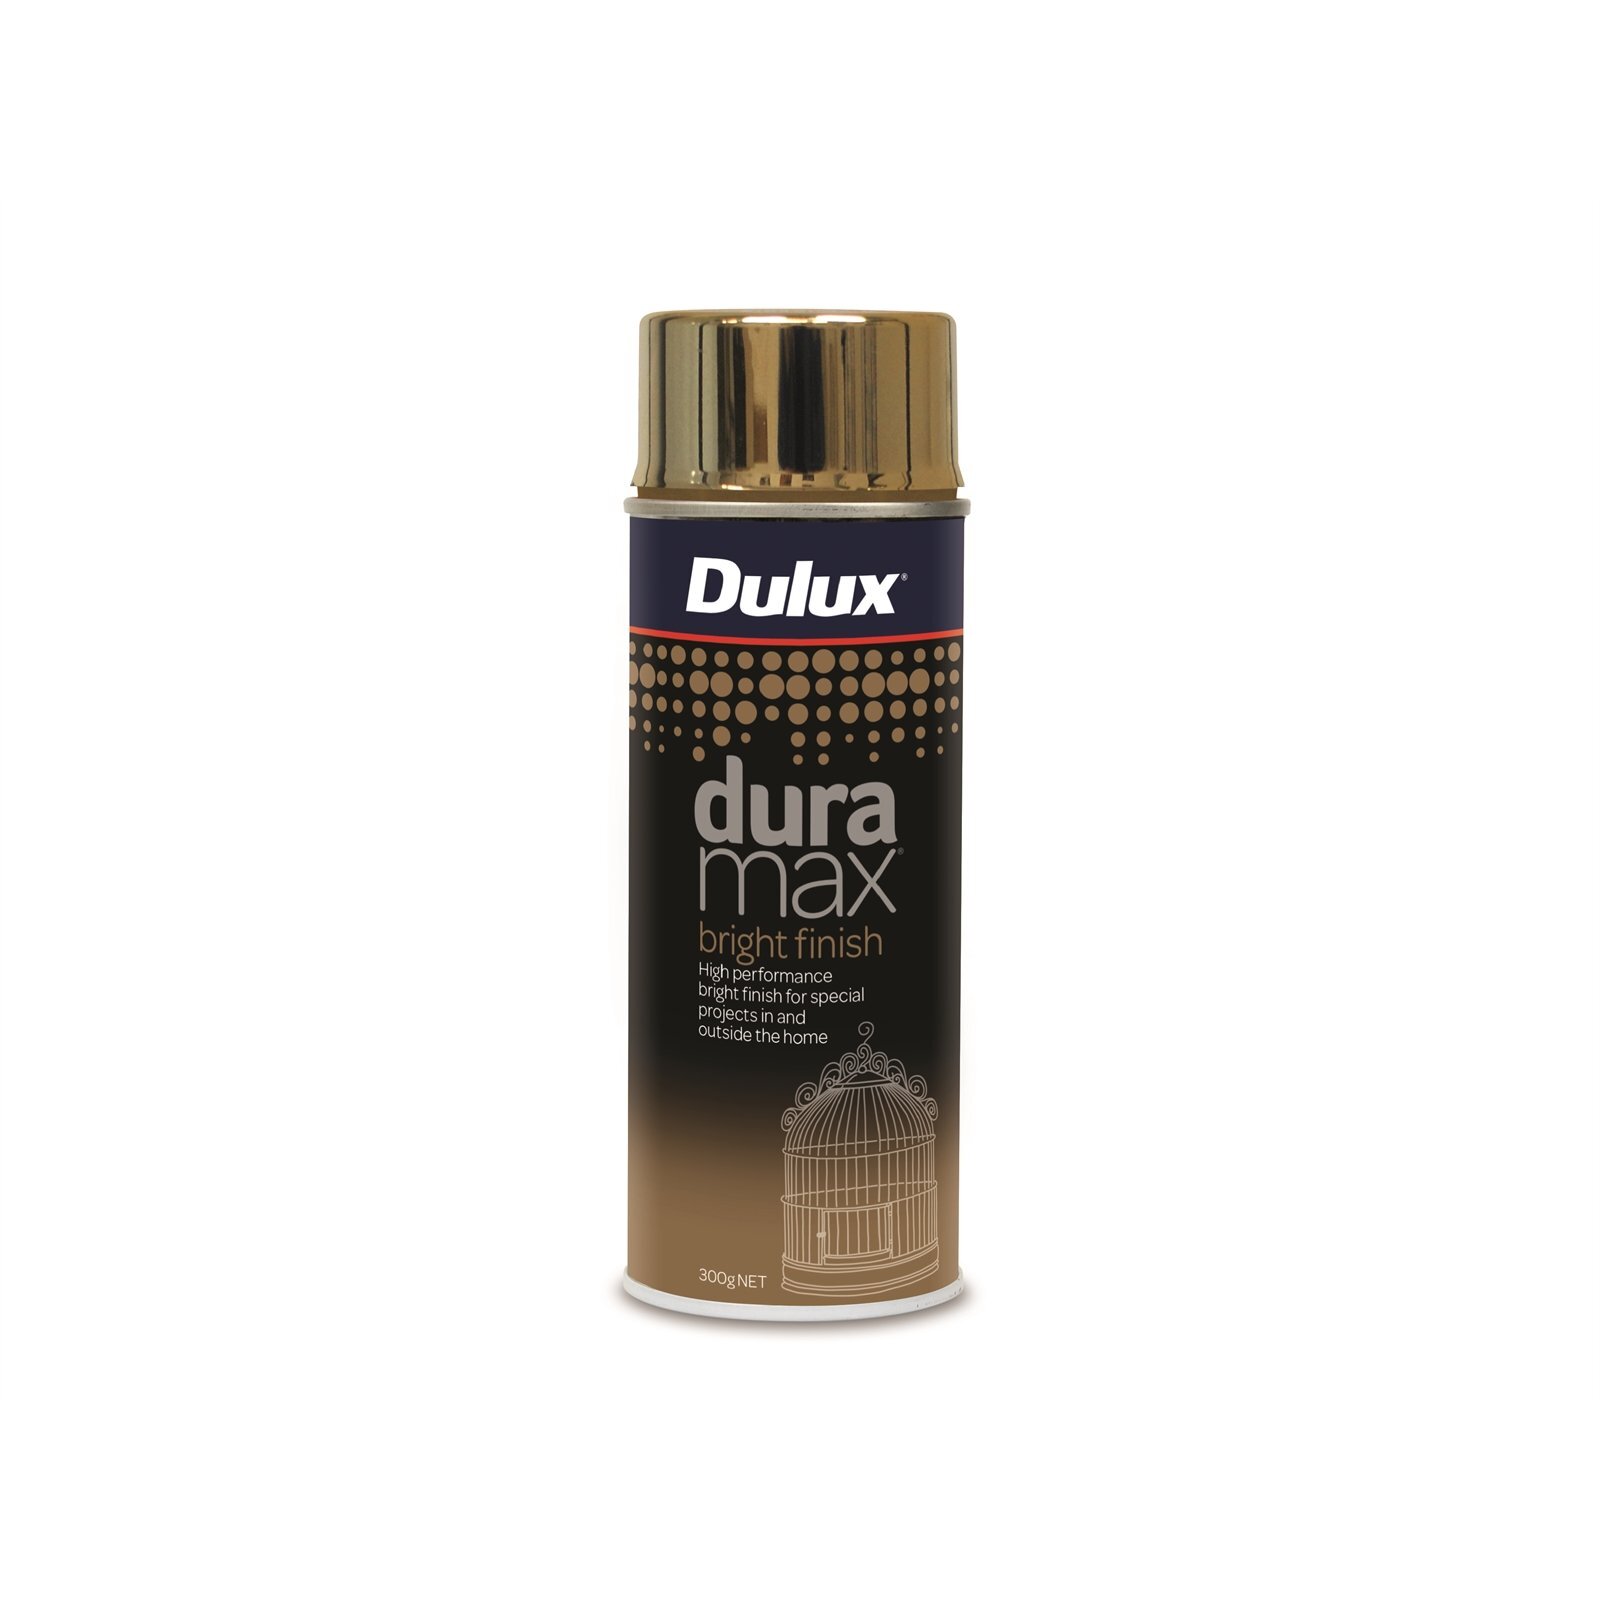 Dulux 300g Gold Finish Paint - Australia